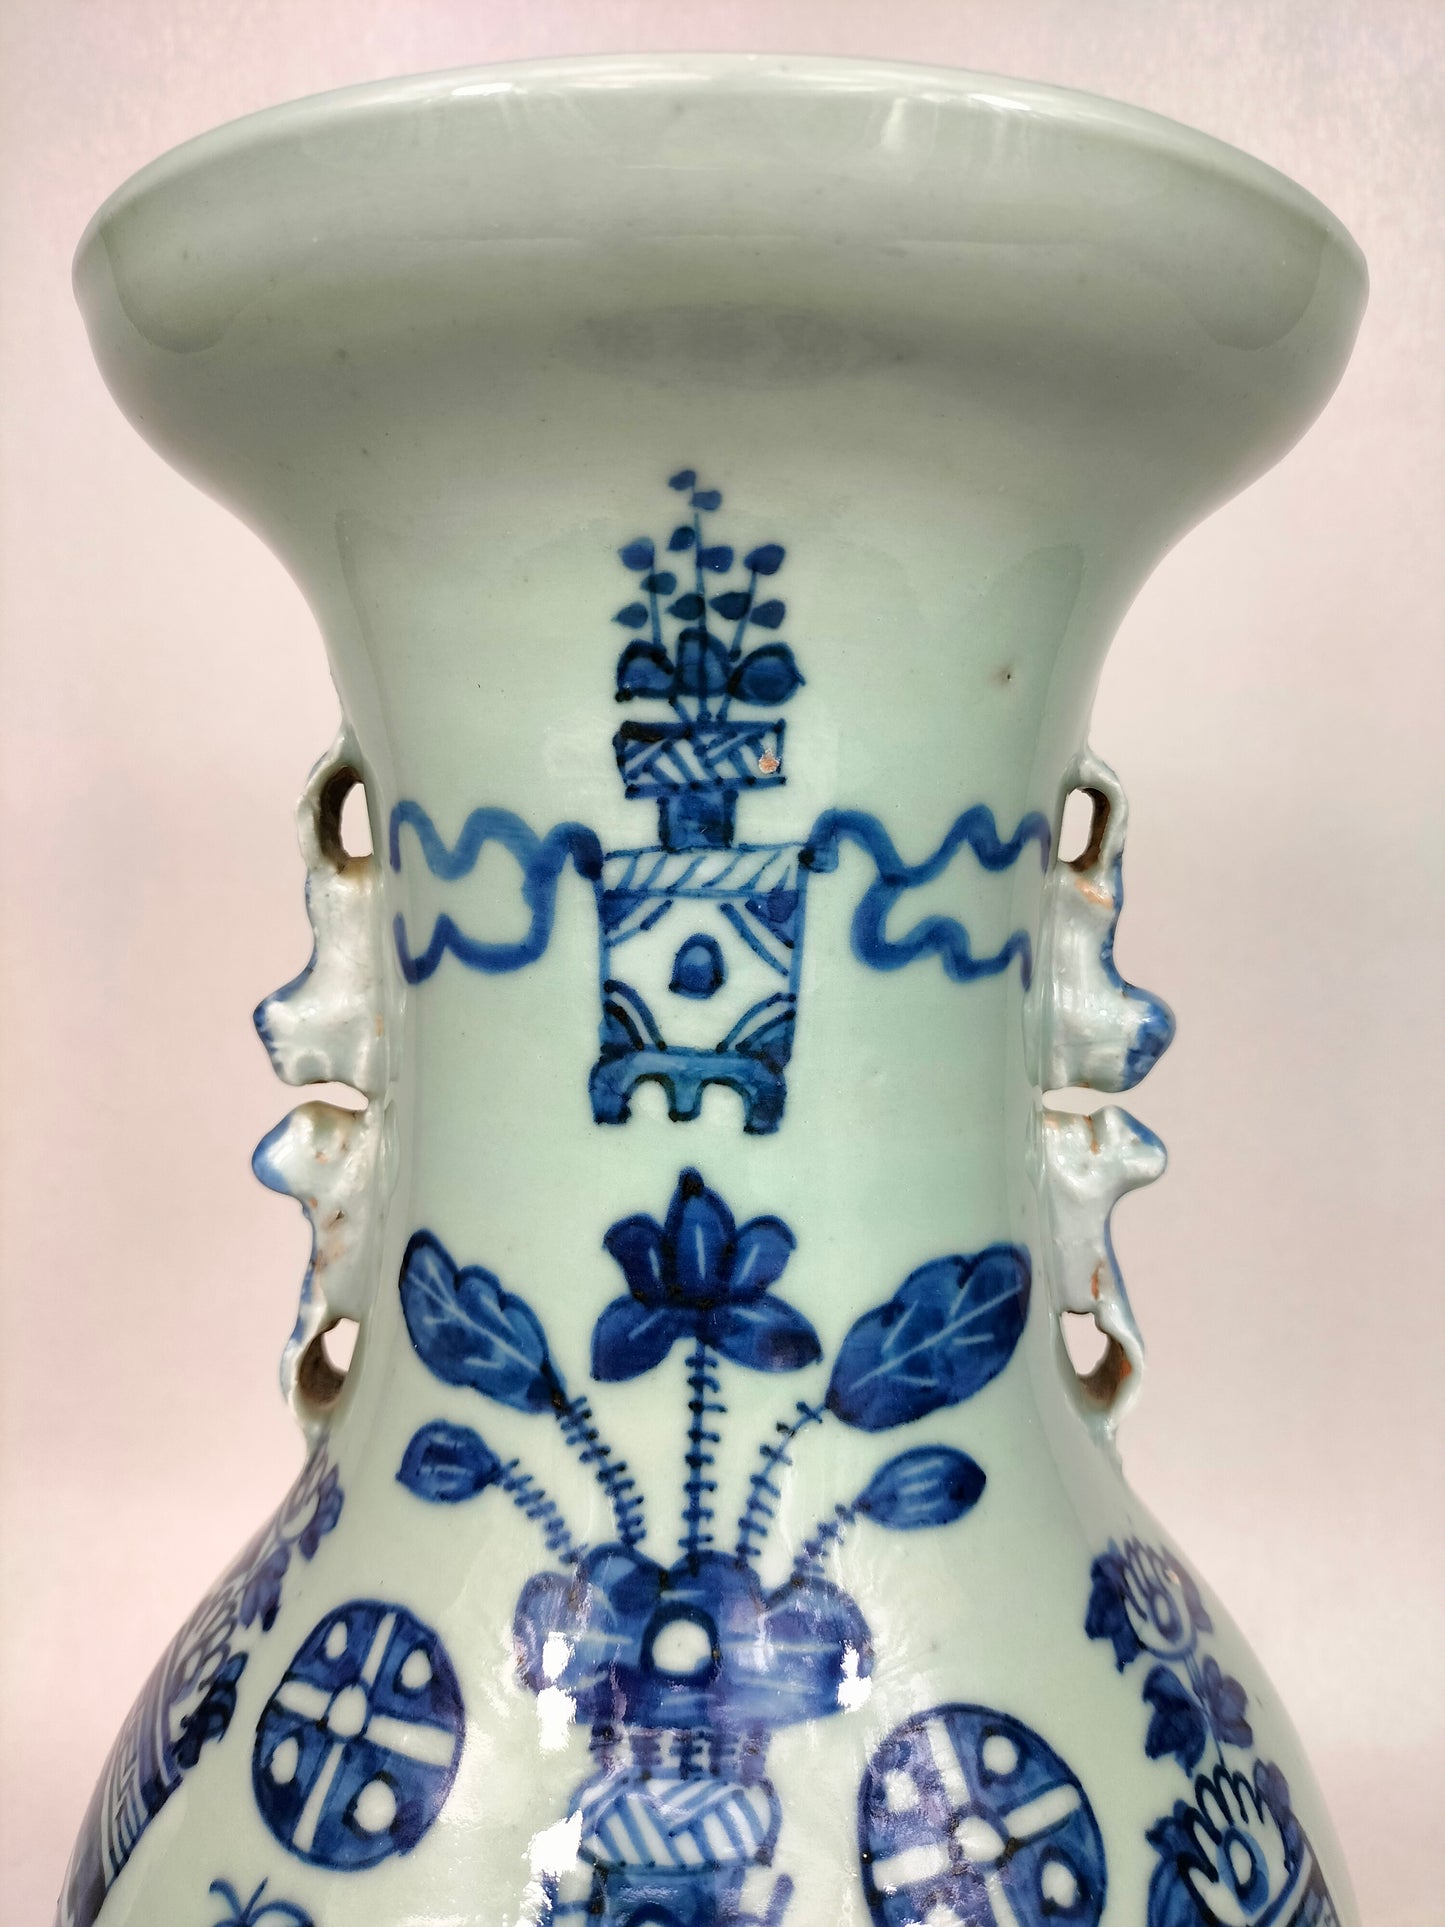 Pasu celadon Cina antik dihiasi dengan barang antik // Dinasti Qing - abad ke-19